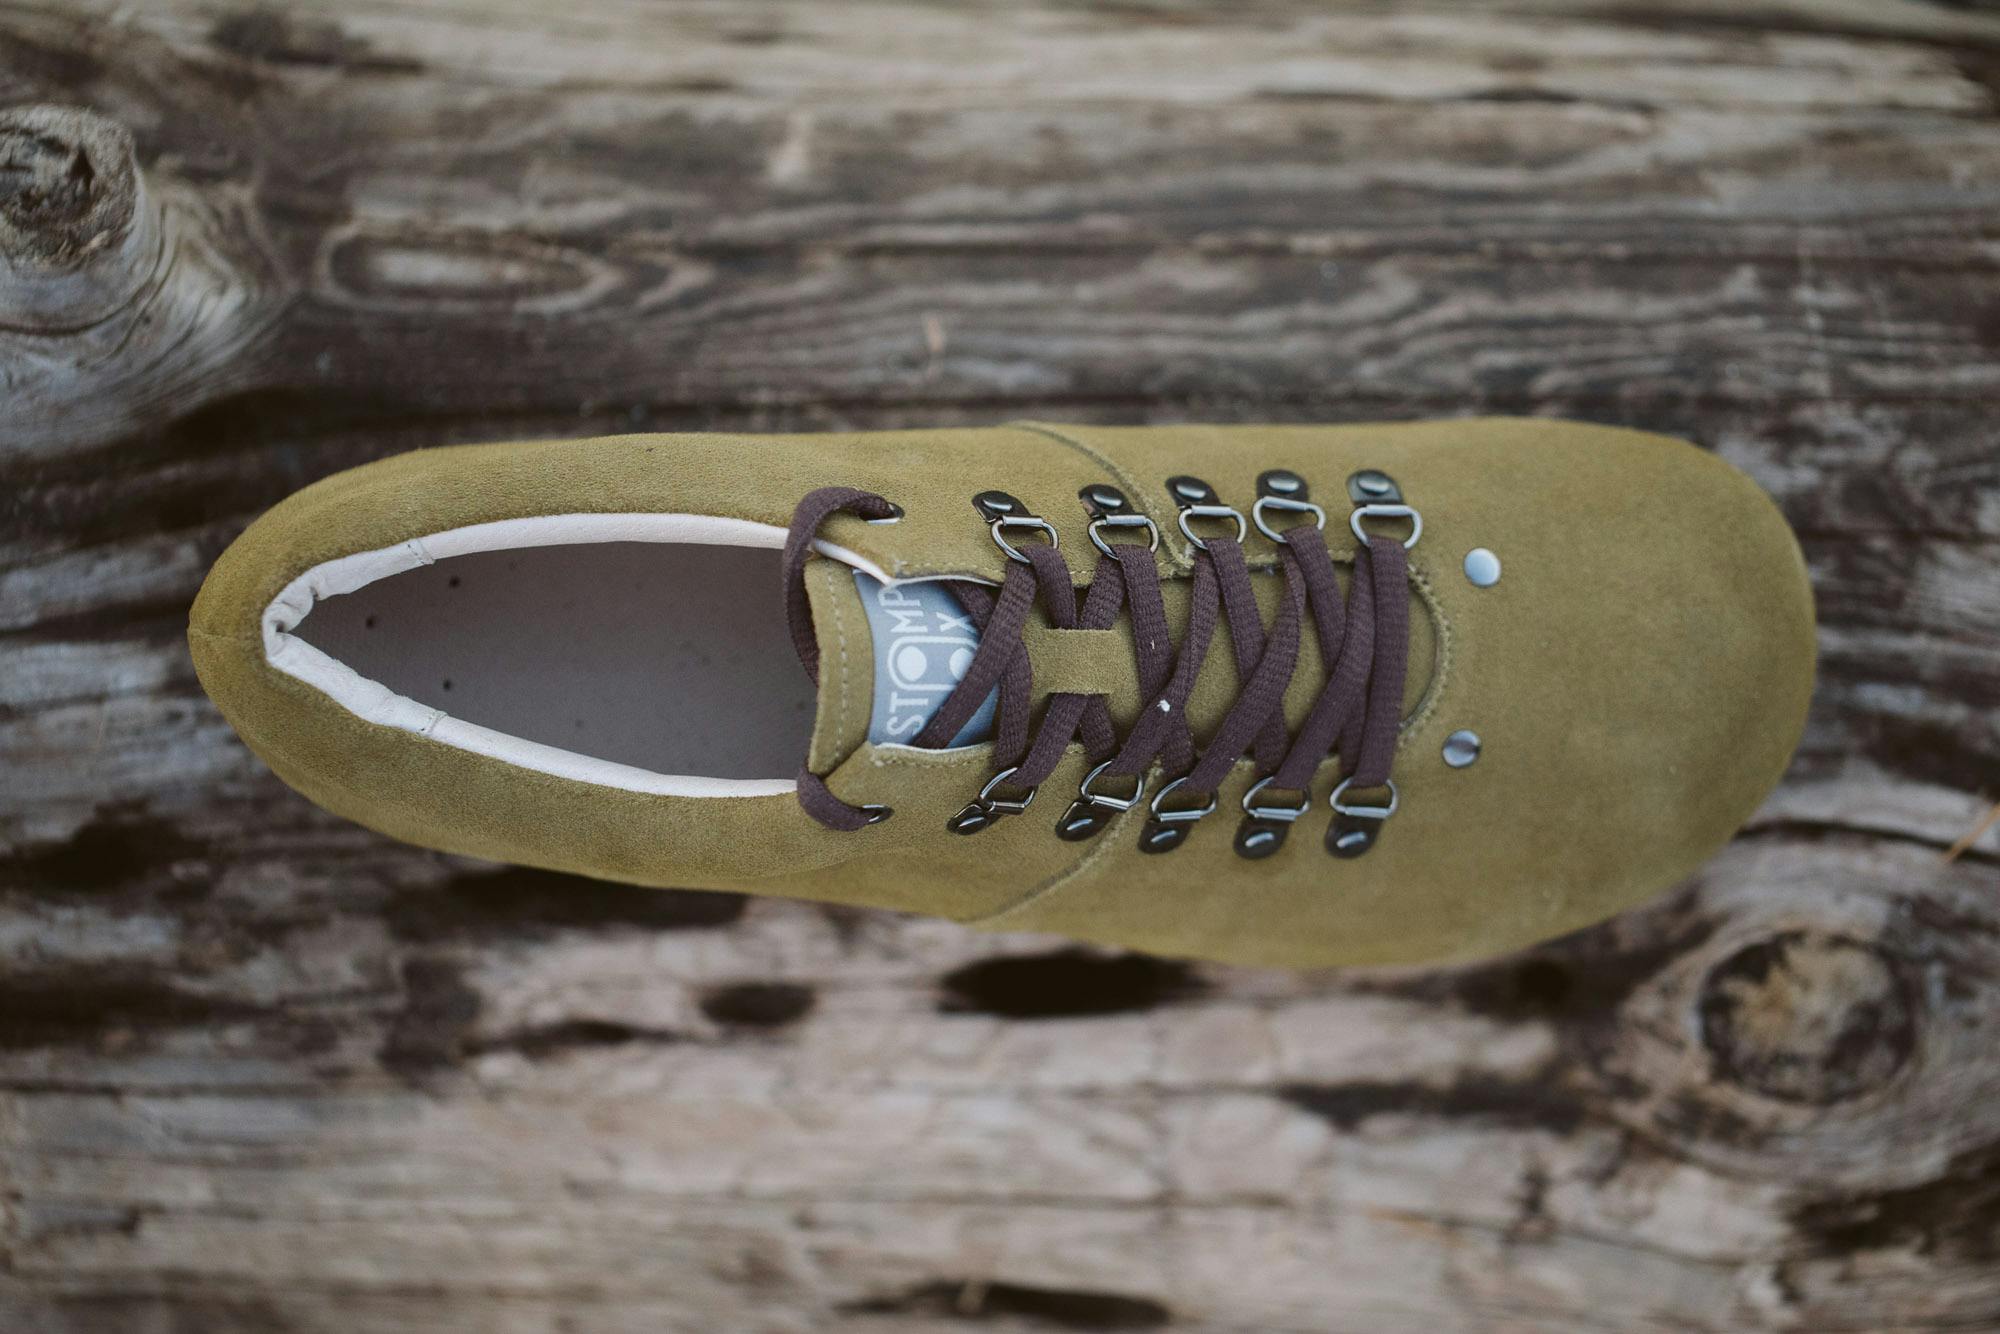 Stomplox Slack shoe on a log.